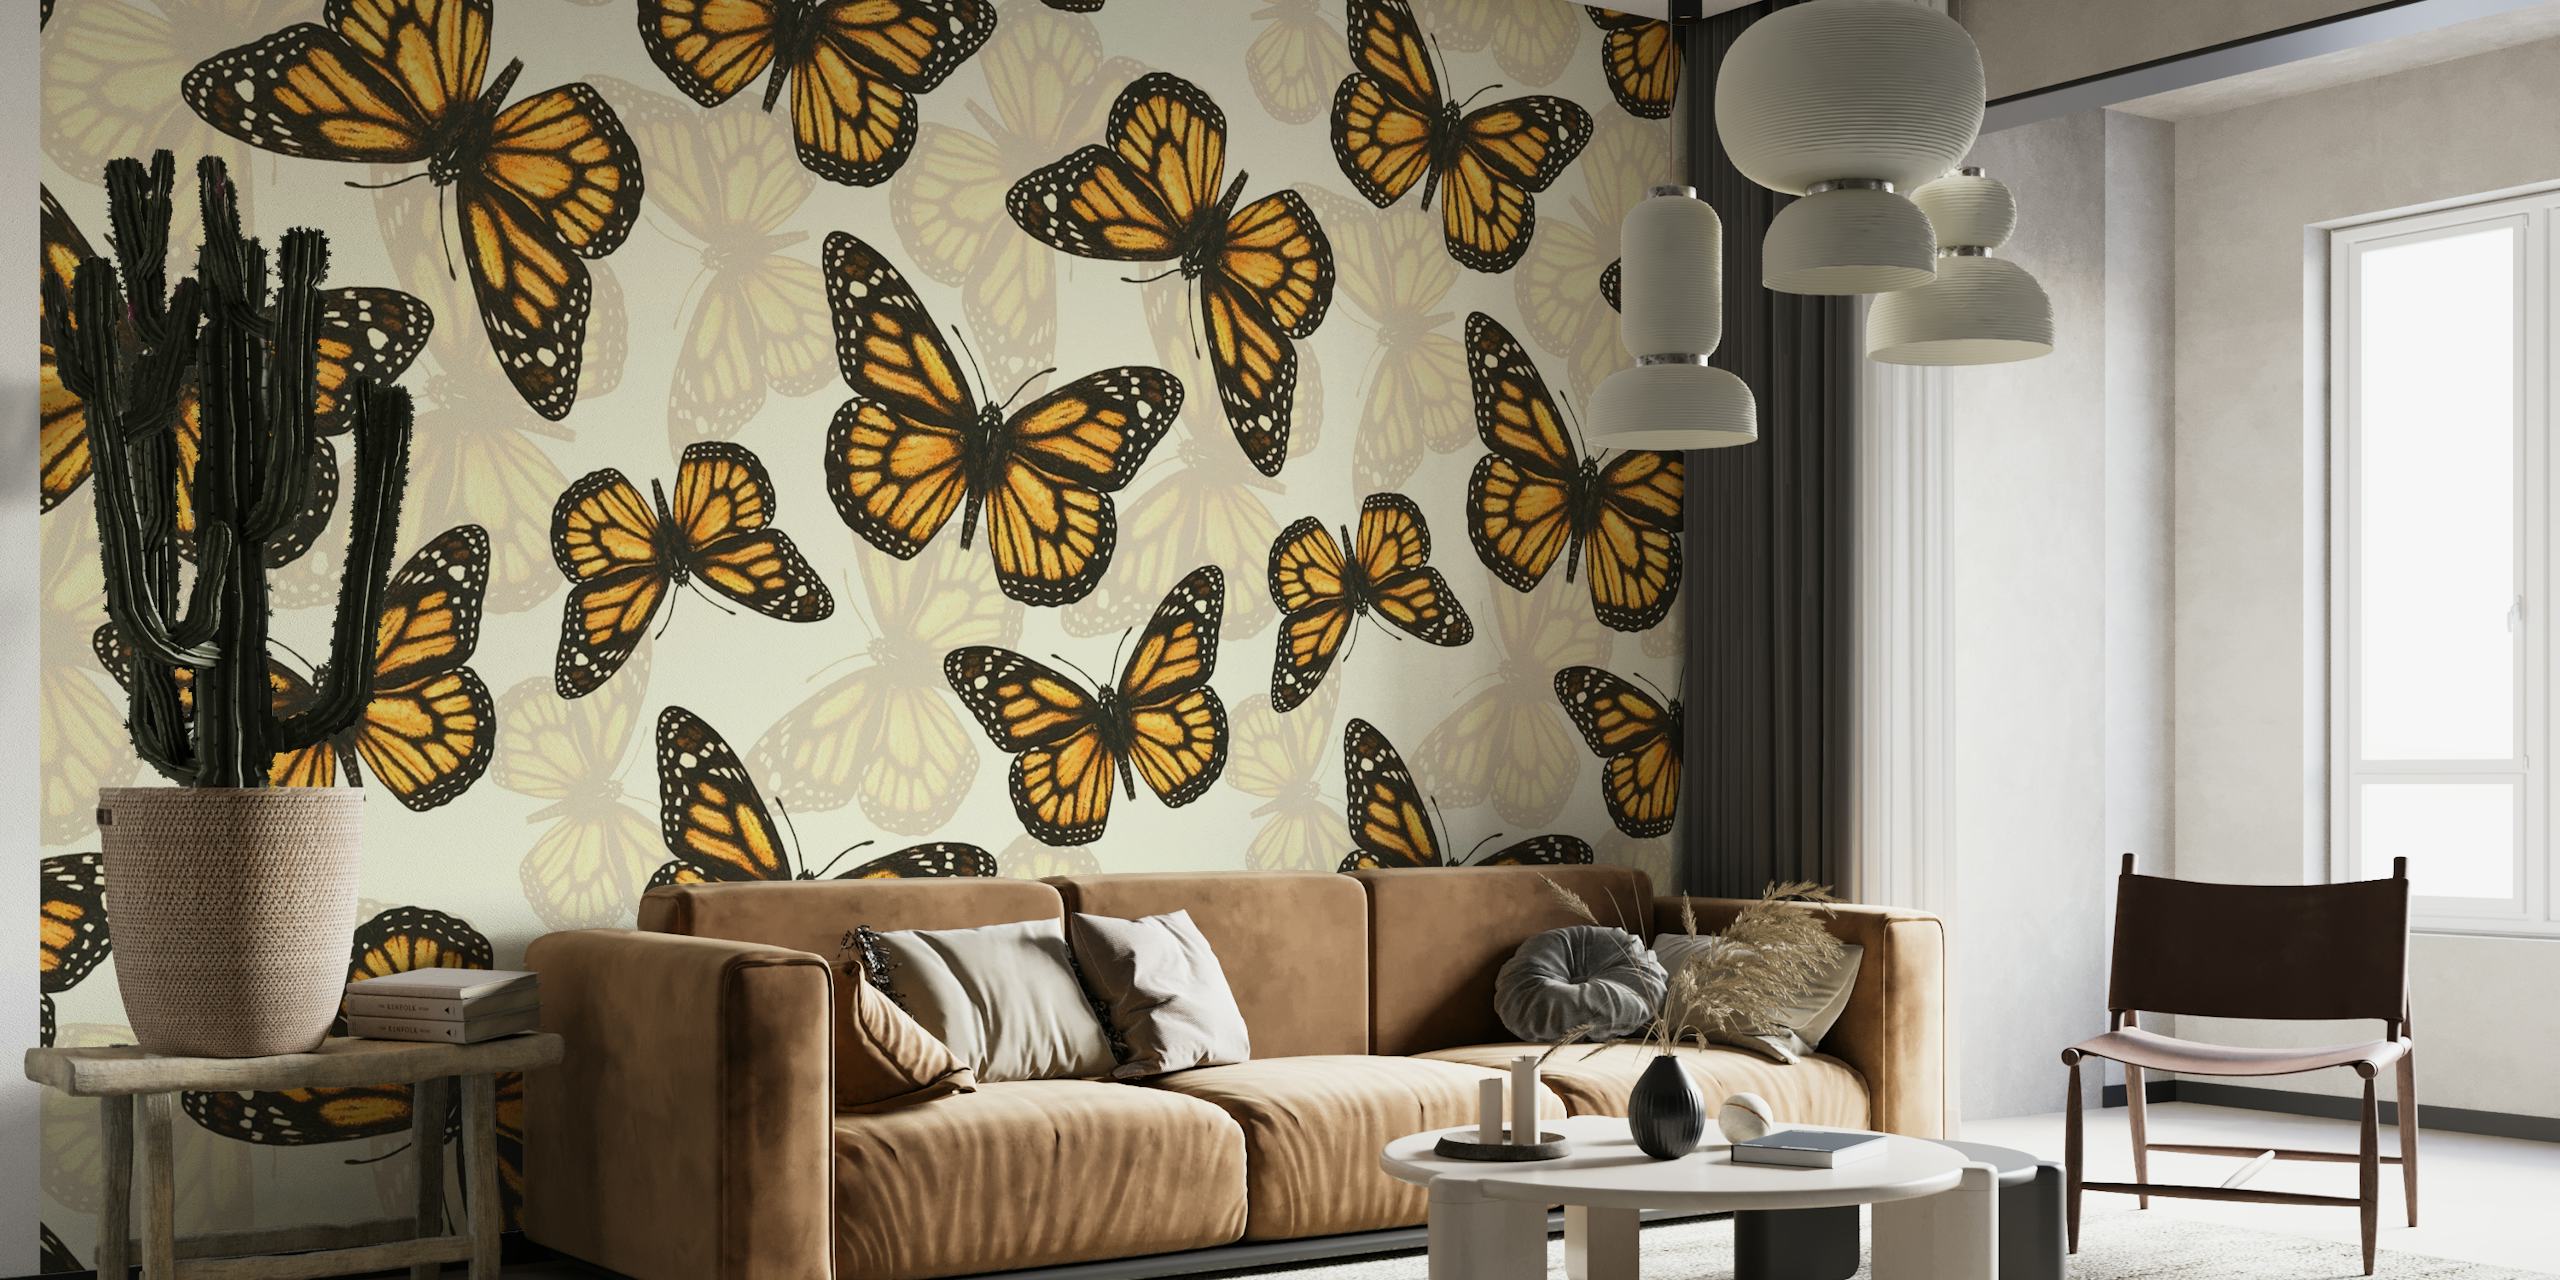 Monarch butterflies wall mural with a seamless pattern design